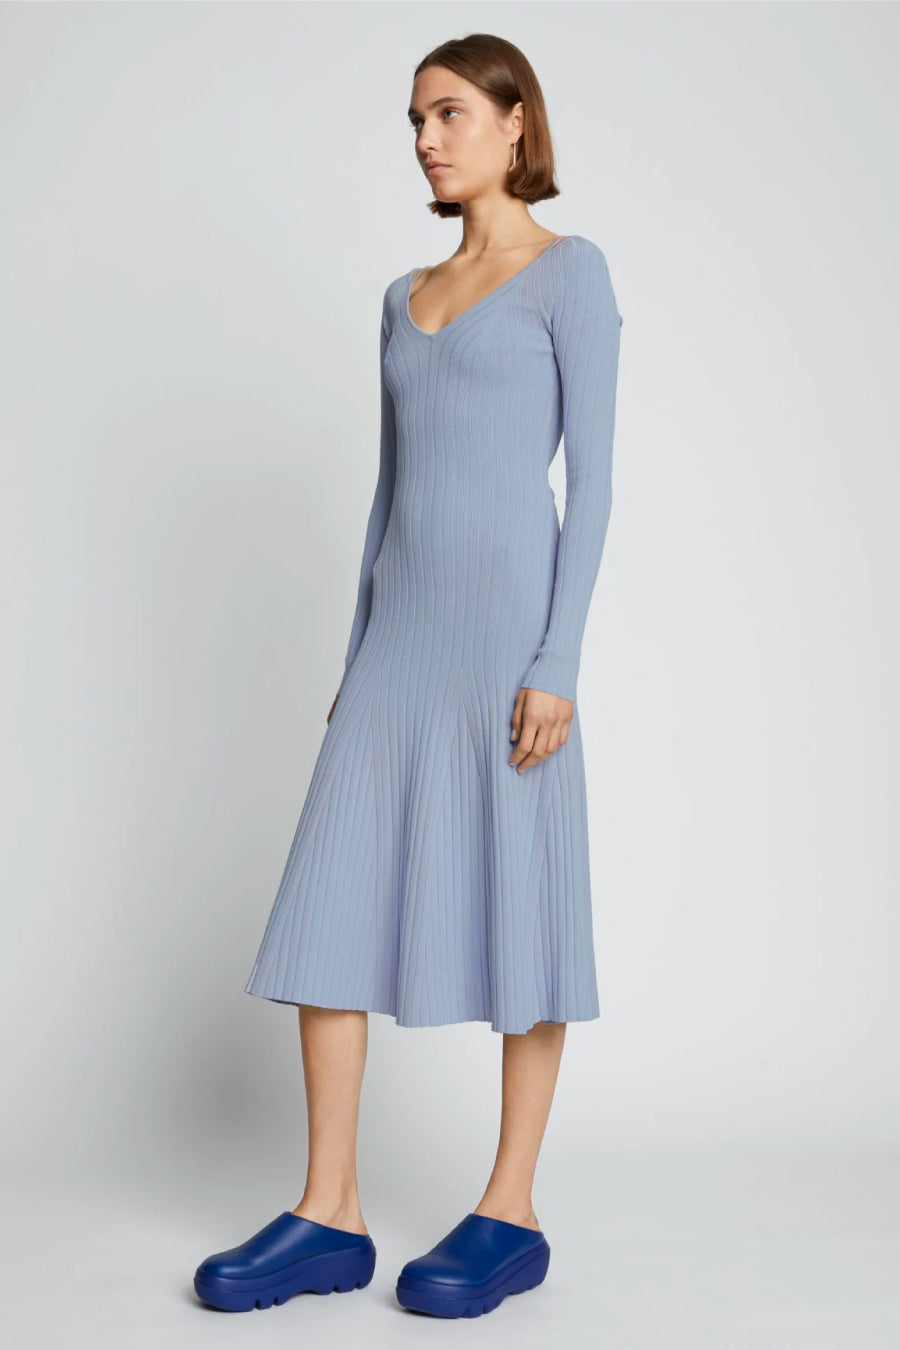 Proenza Schouler White Label Lightweight Rib Knit V-Neck Dress - Stone Blue